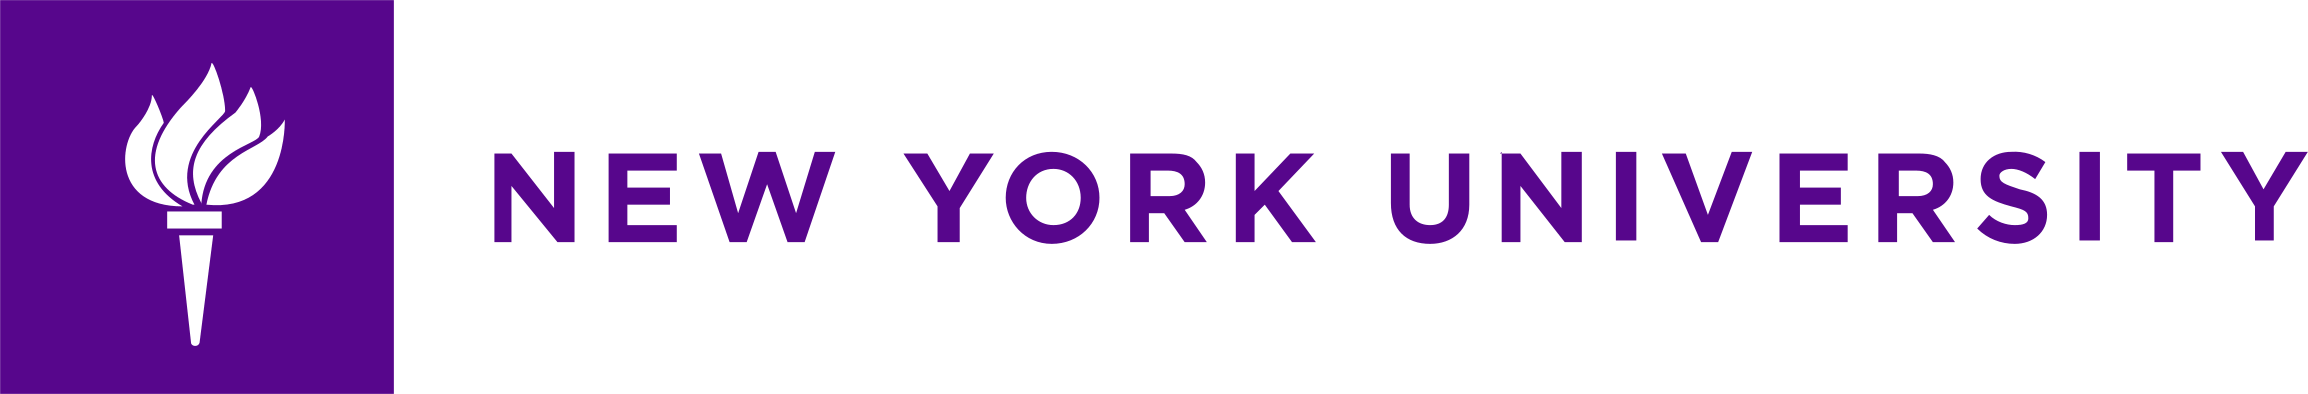 NYU logo